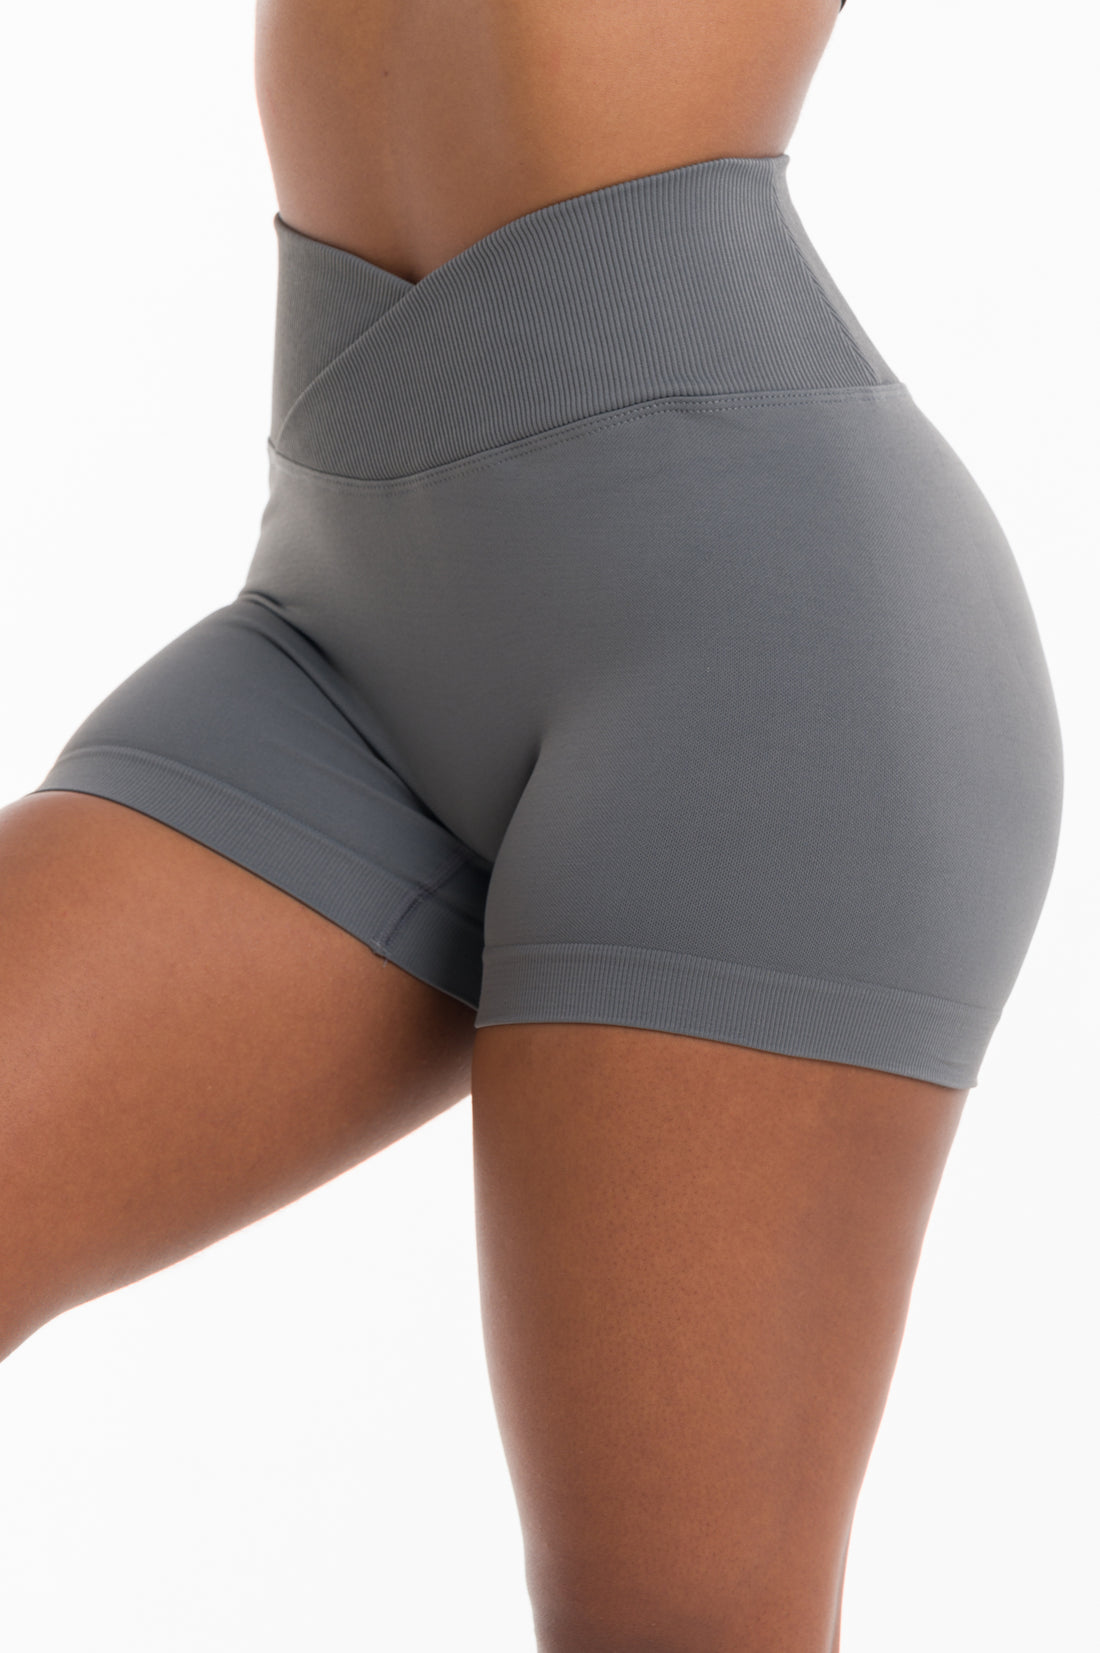 FitnessFox Stone Grey Scrunch Bum Shorts, FITNESS FOX